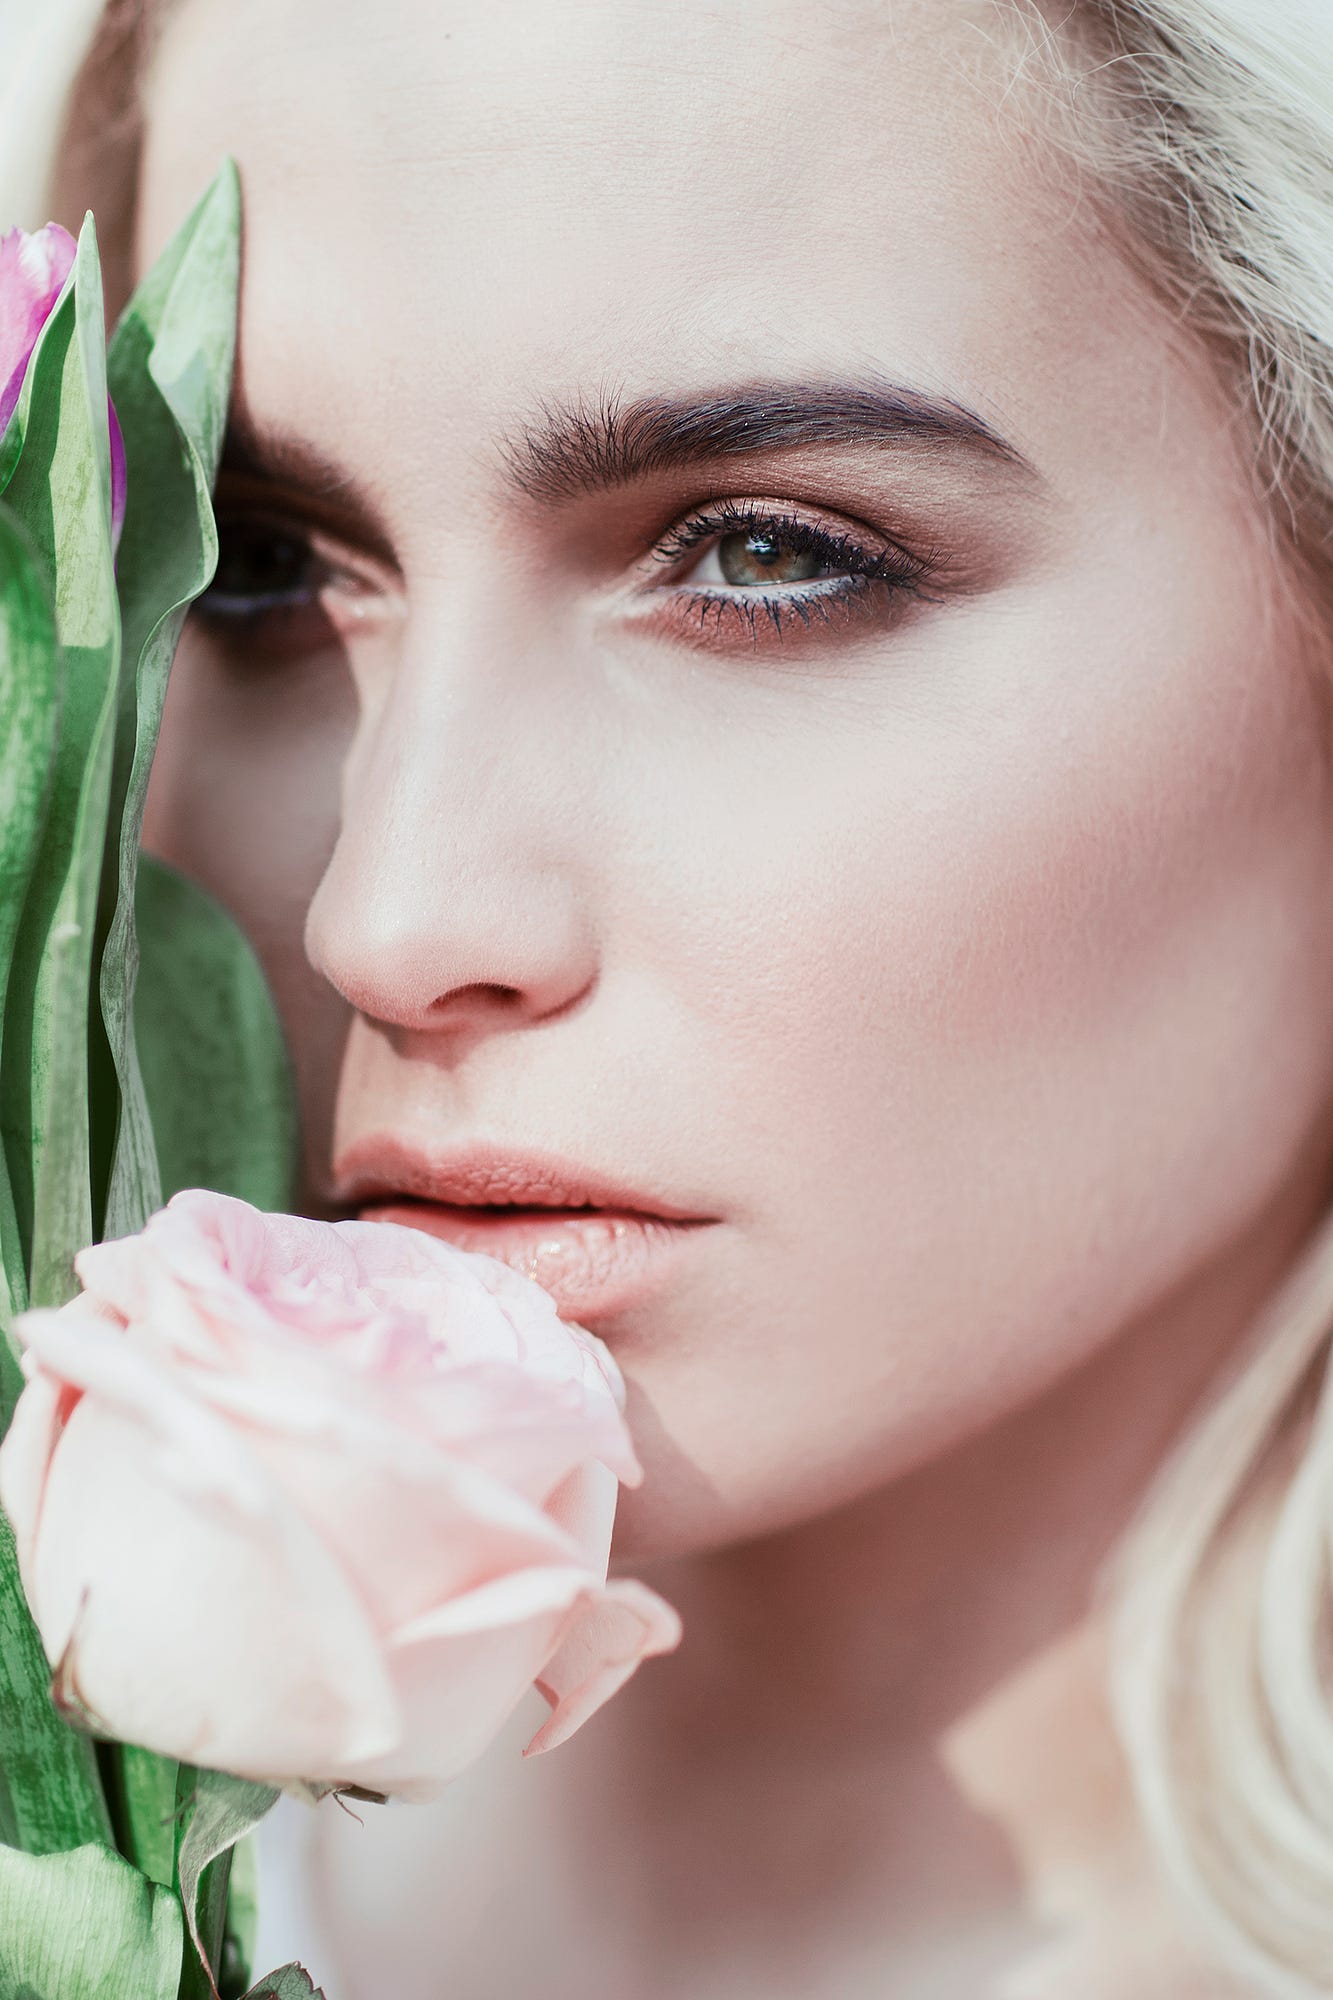 Фото Девушка с розой у лица, фотограф Jovana Rikalo